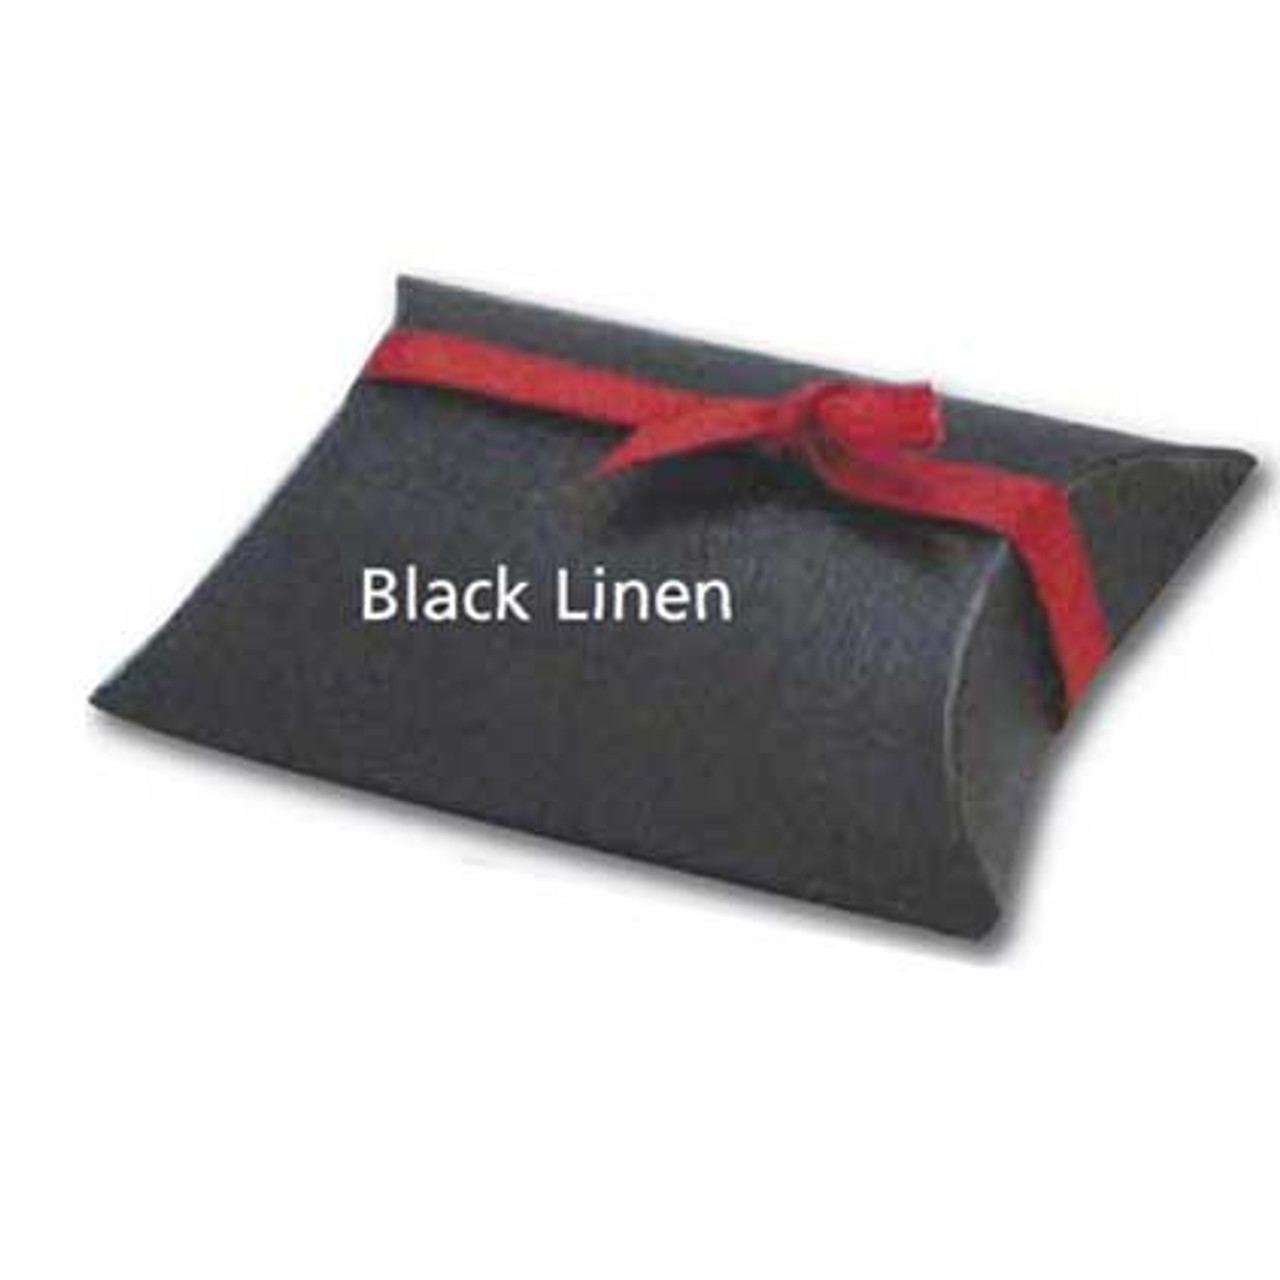 Black Linen Medium Size Pillow Box 4" x 4" x 1-1/4"